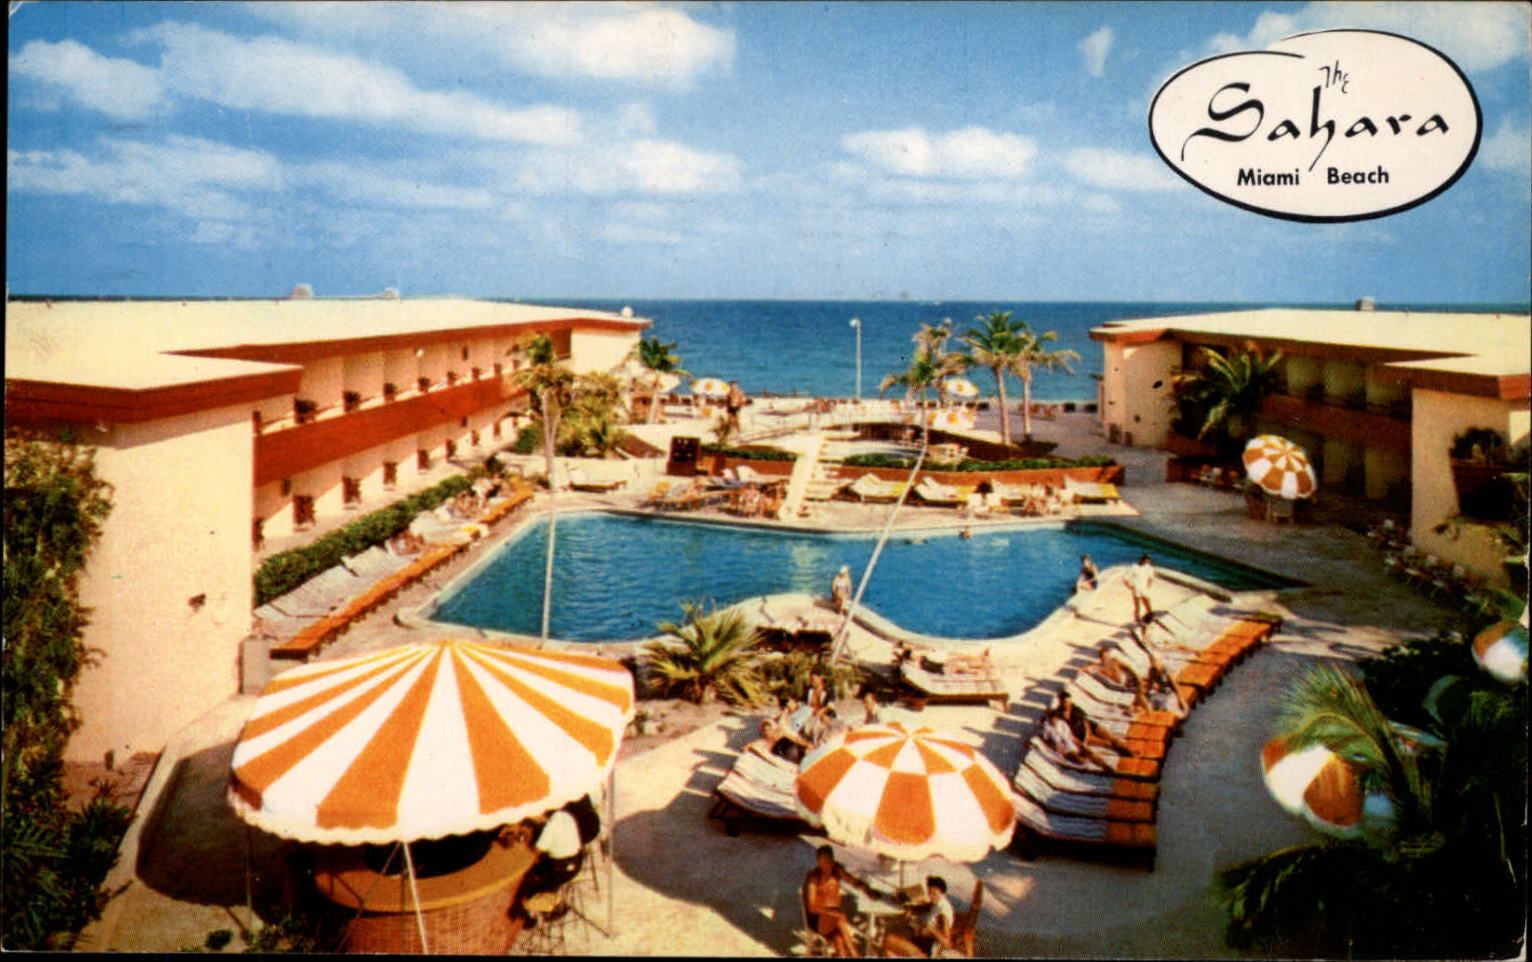 Miami Beach Florida Ben B Gaines Sahara Hotel pool mailed 1959 vintage postcard